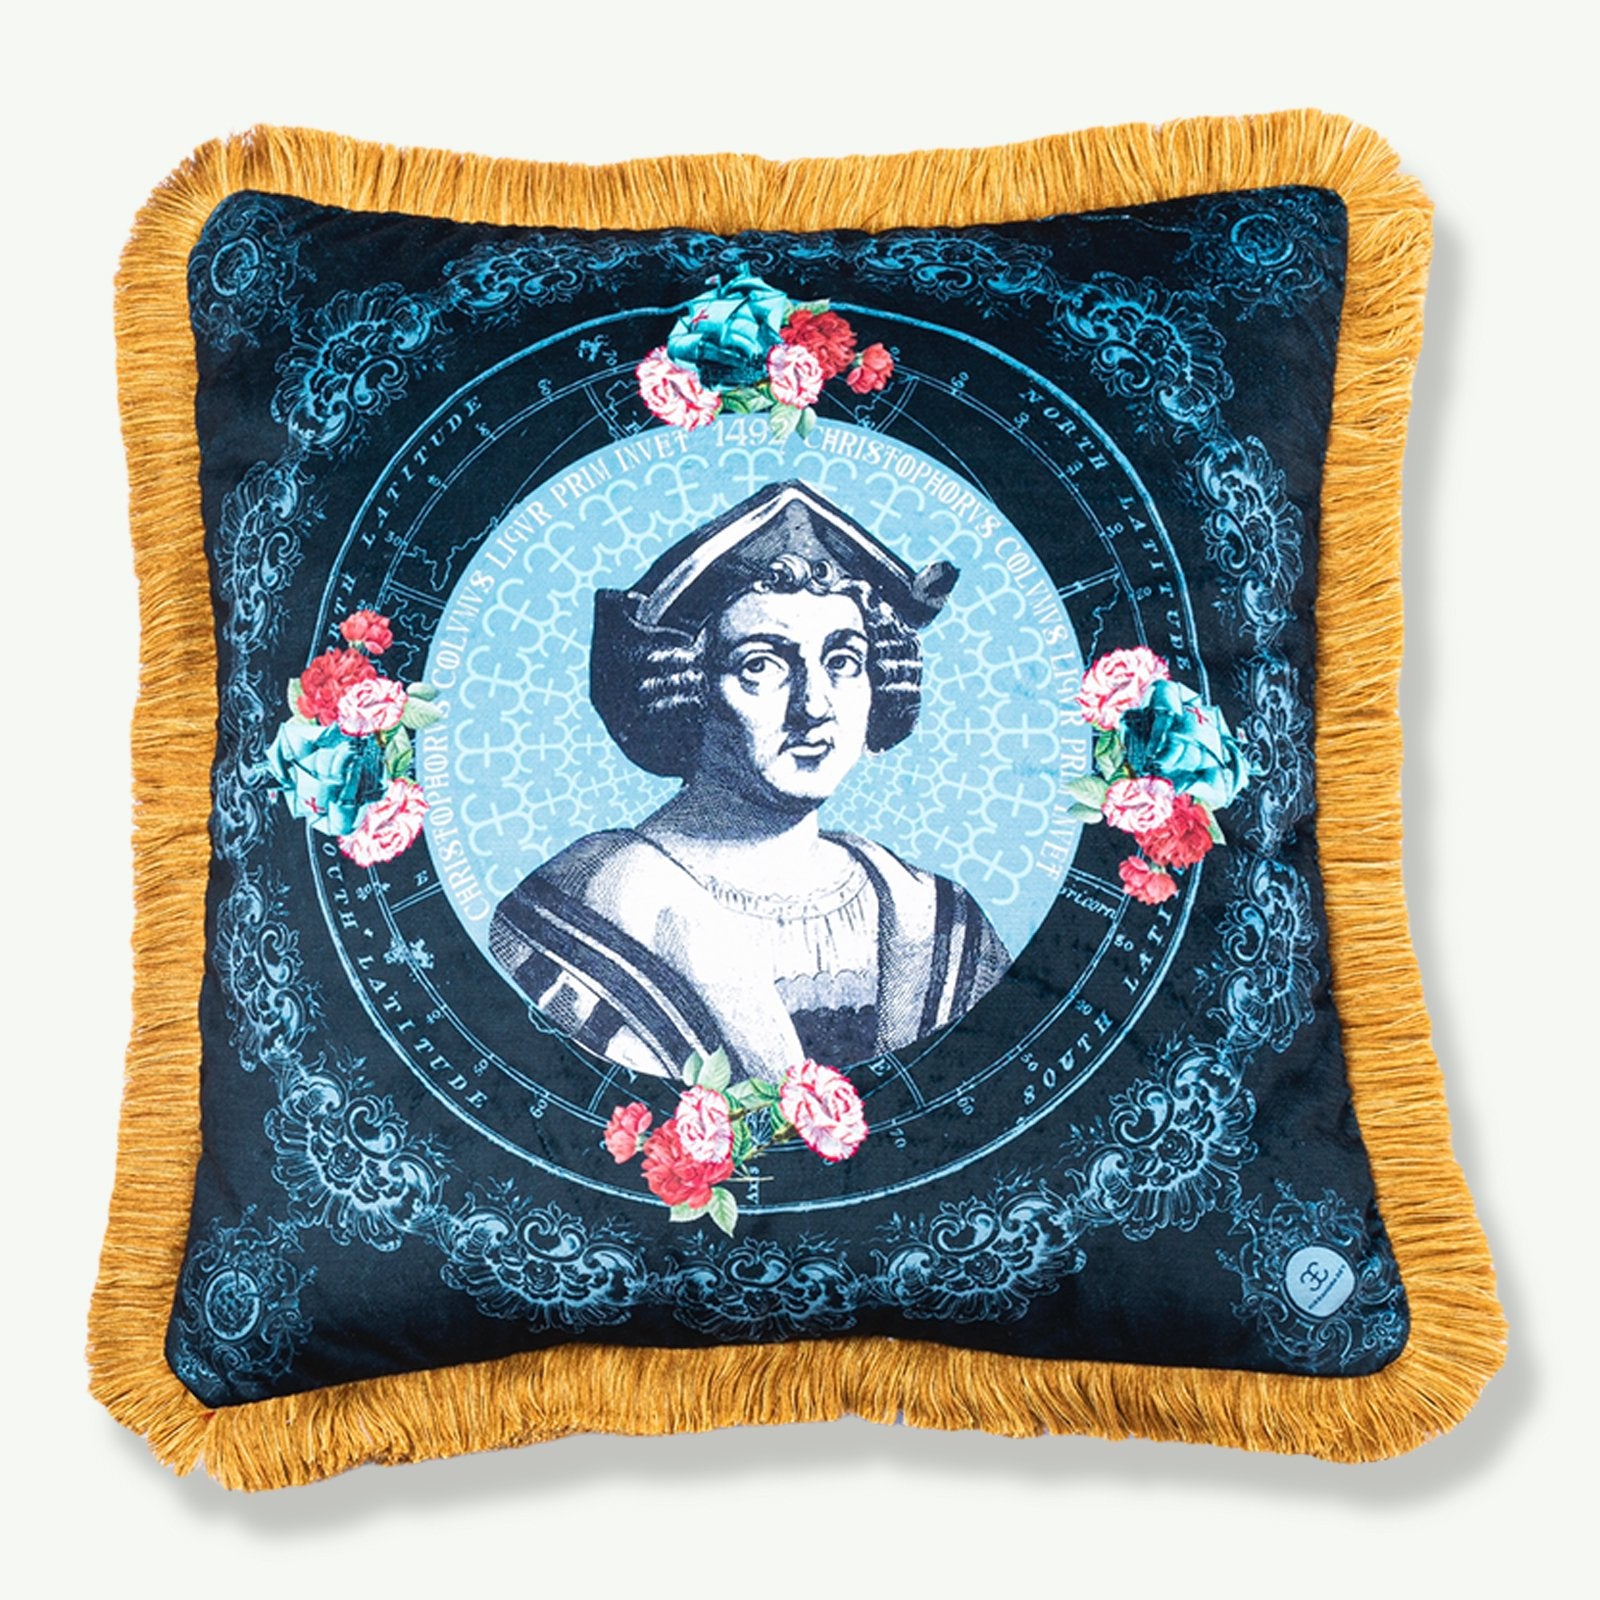 Christopher Columbus" bluish-black cushion